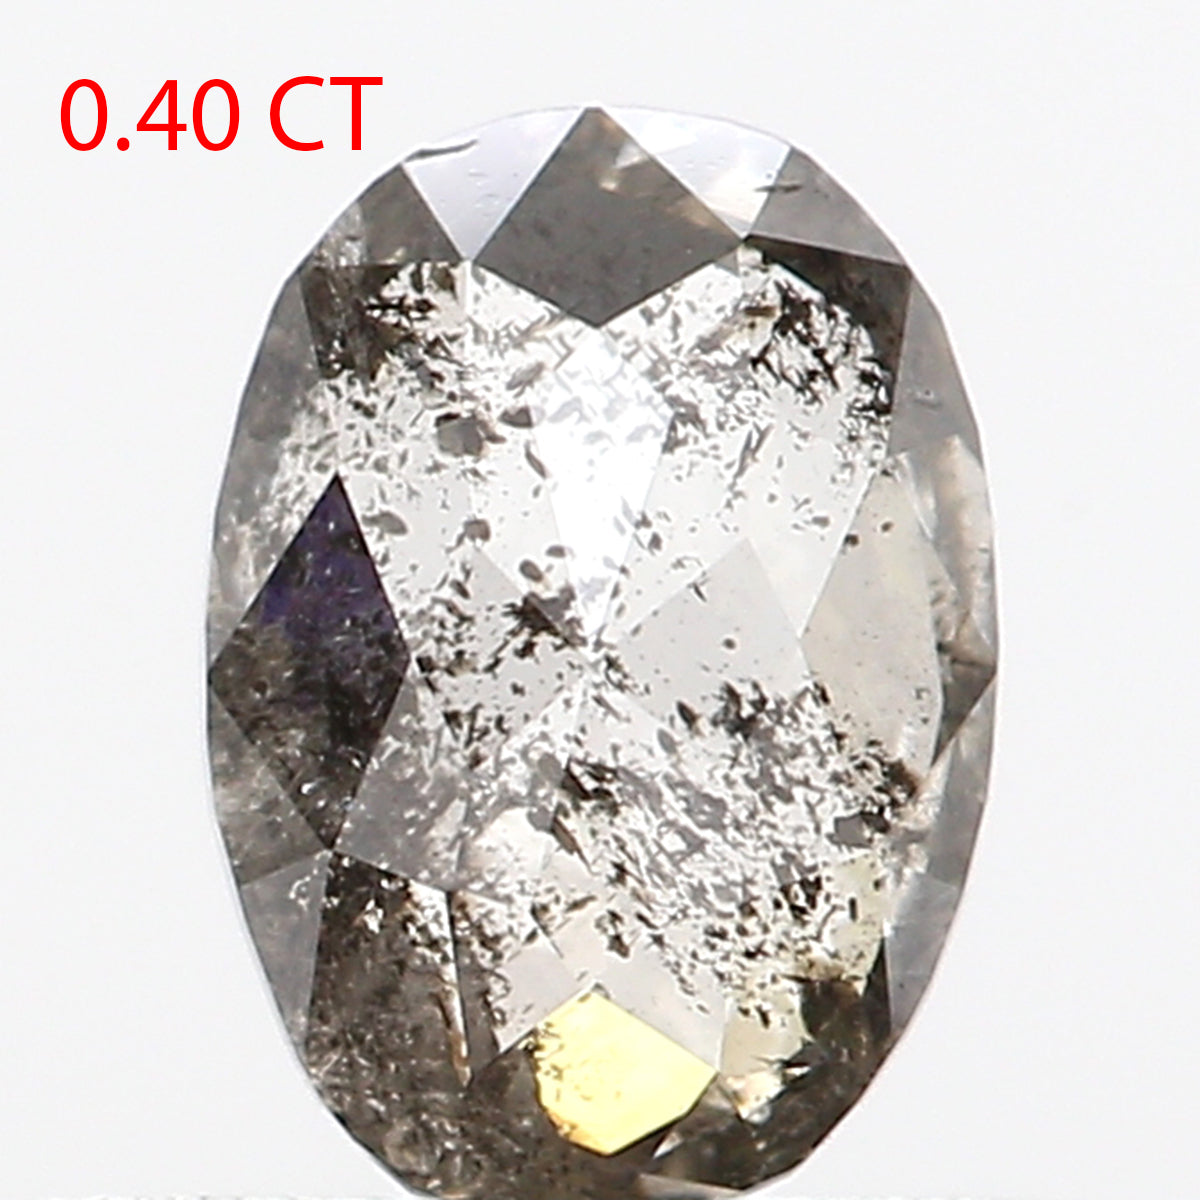 0.40 Ct Natural Loose Diamond, Oval Diamond, Black Diamond, Grey Diamond, Salt and Pepper Diamond, Antique Diamond, Real Diamond L422